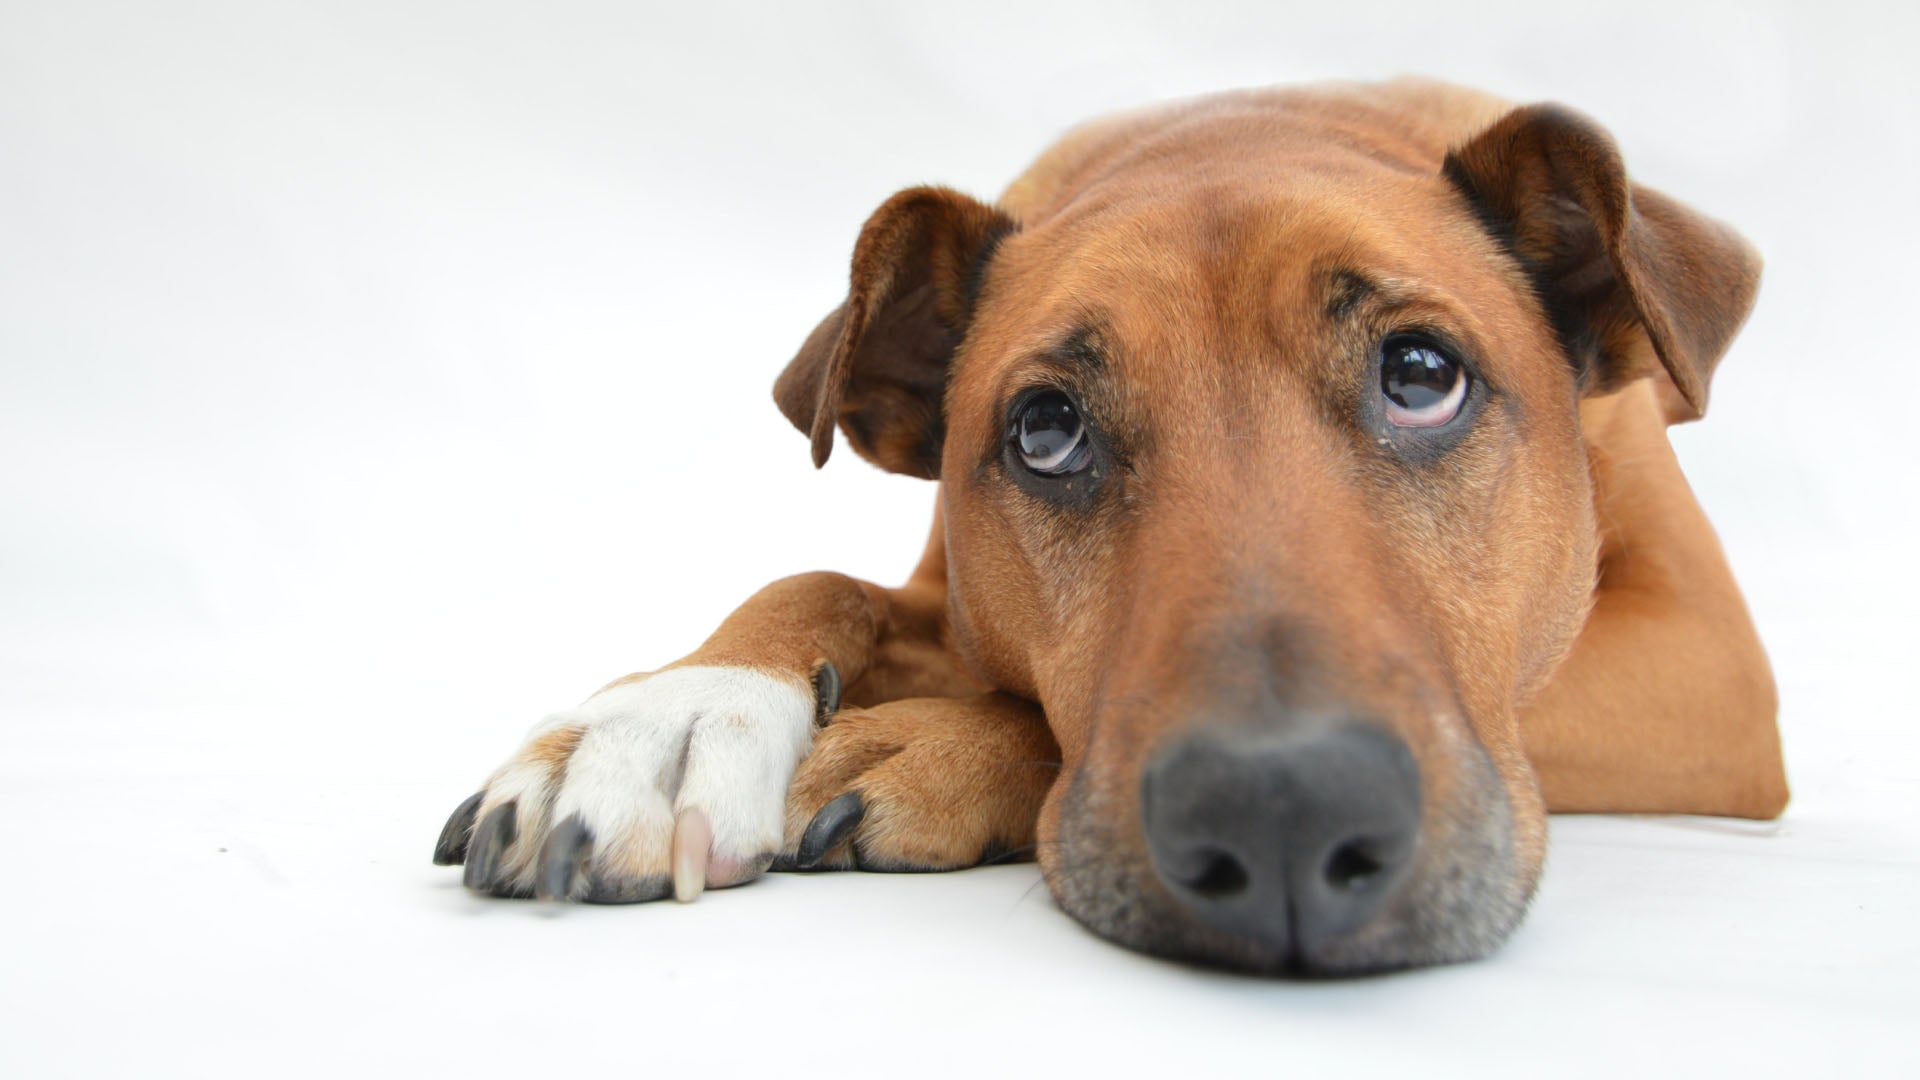 Do slow-feeder dog bowls frustrate dogs?